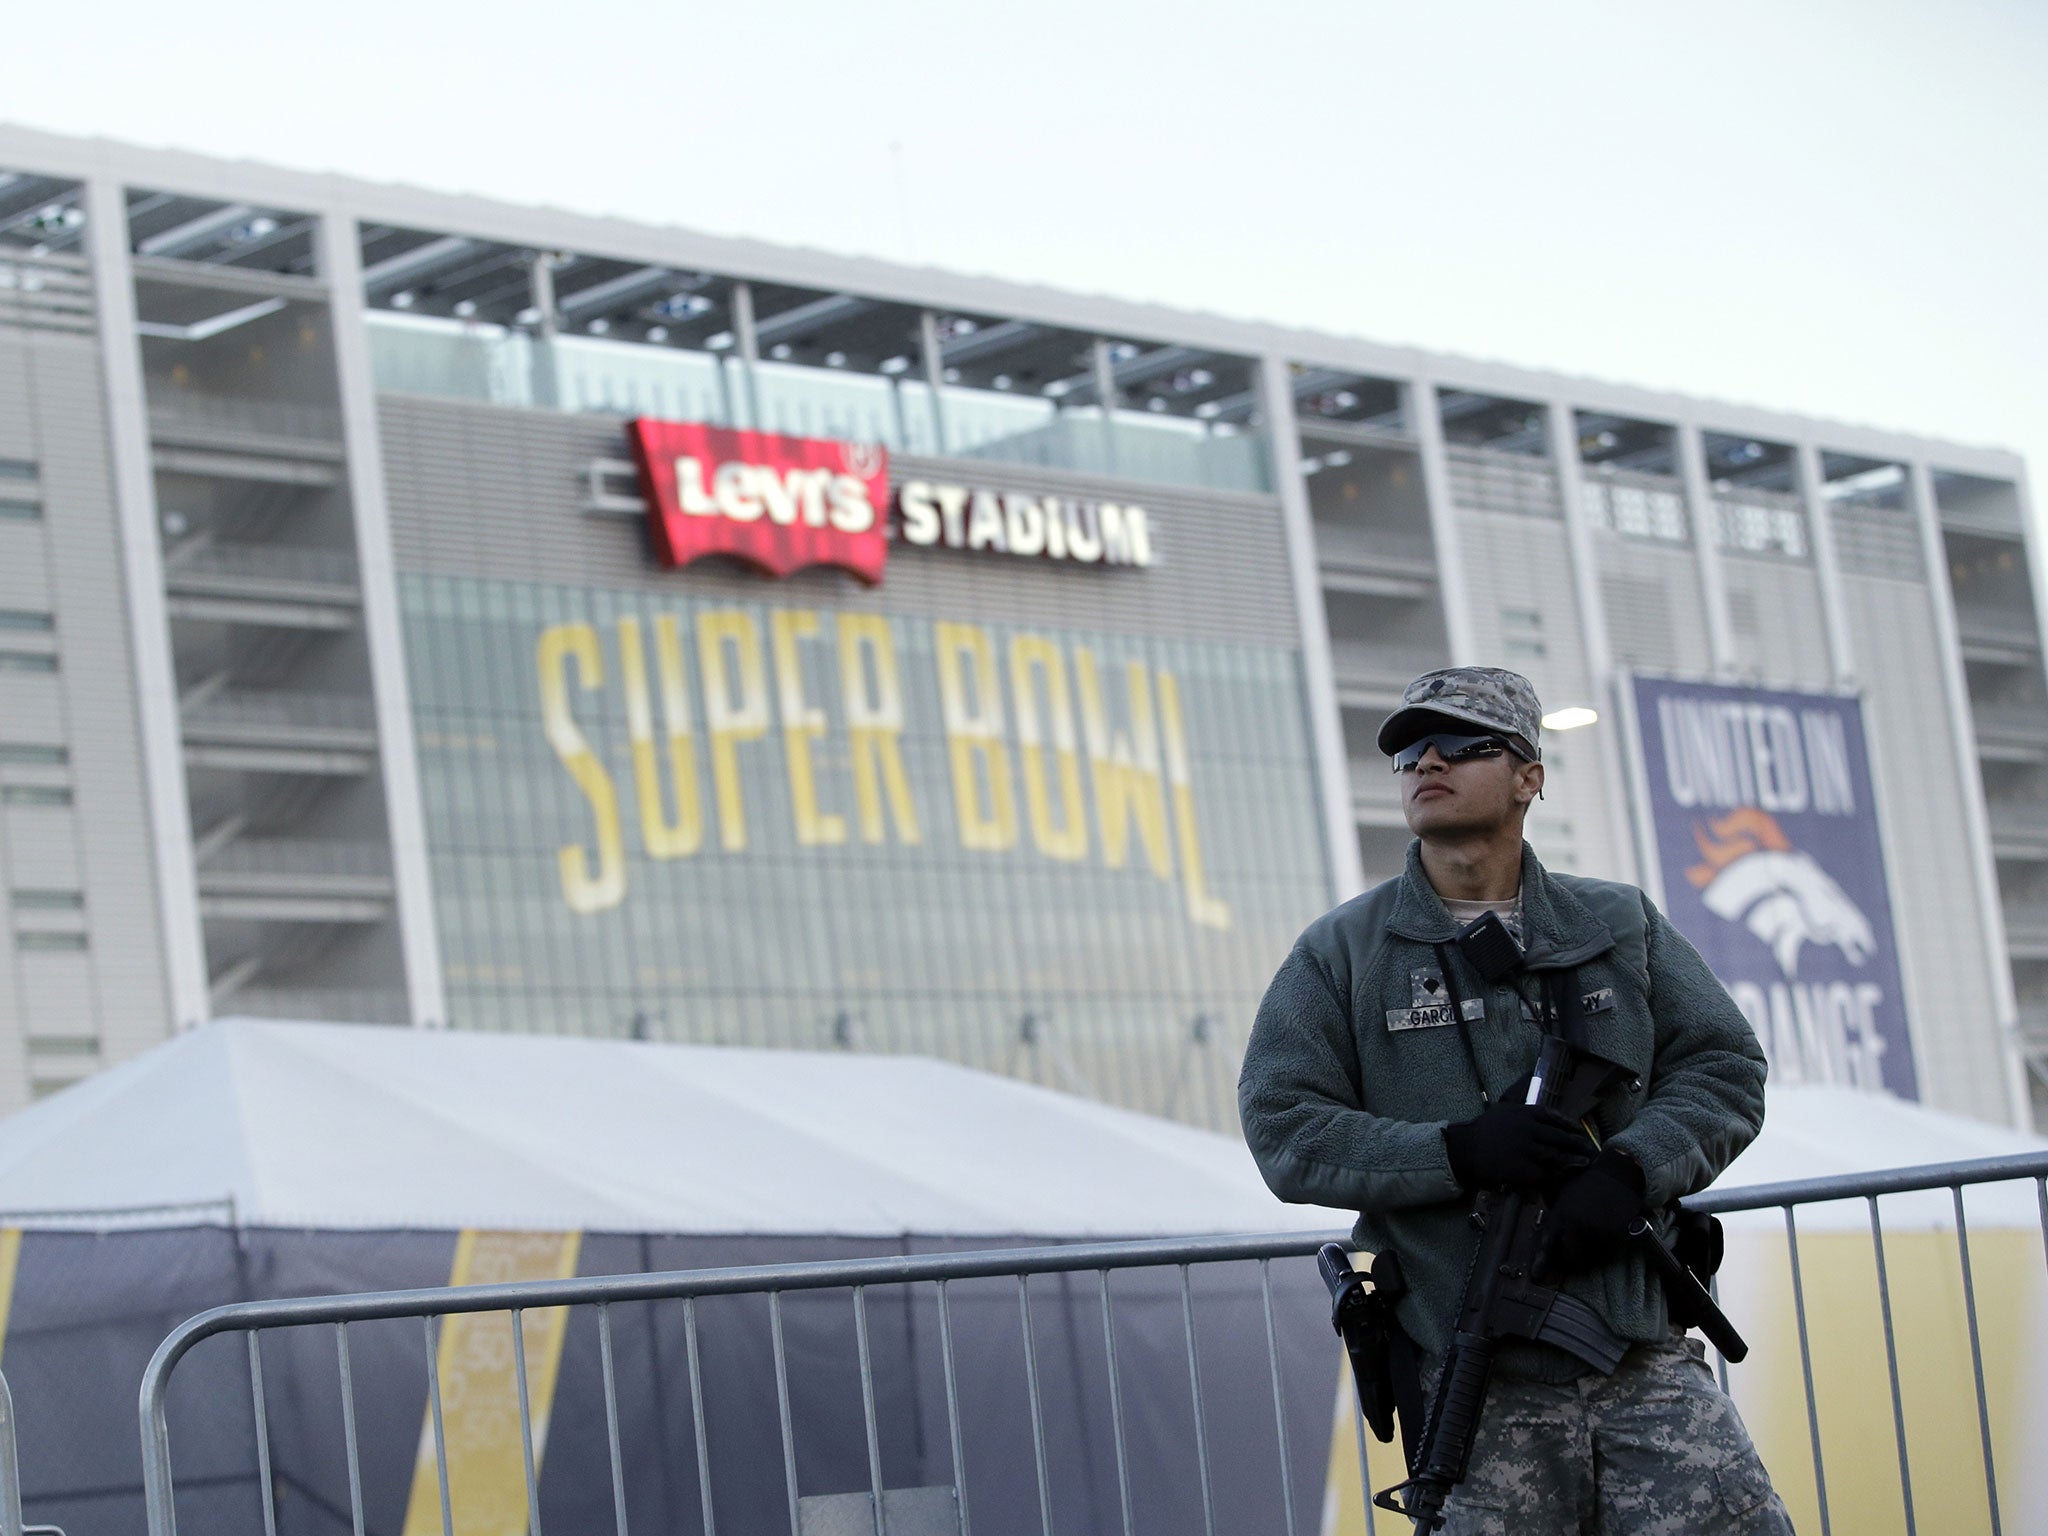 A US Army soldier patrols outside the Levi's Stadium in Santa Clara, California